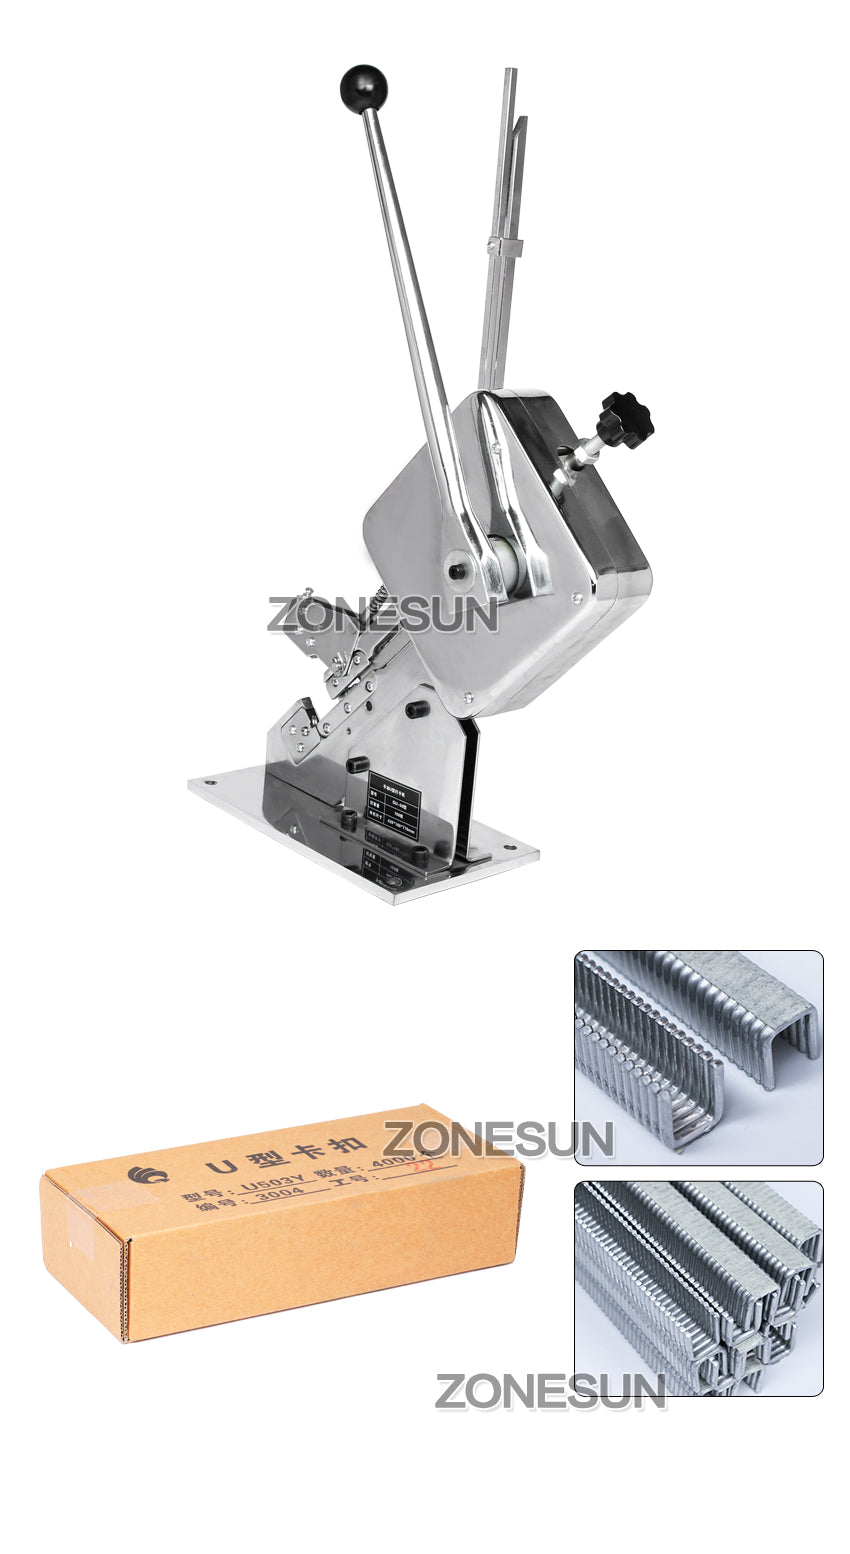 ZONESUN Manual U-shape Clipping Machine